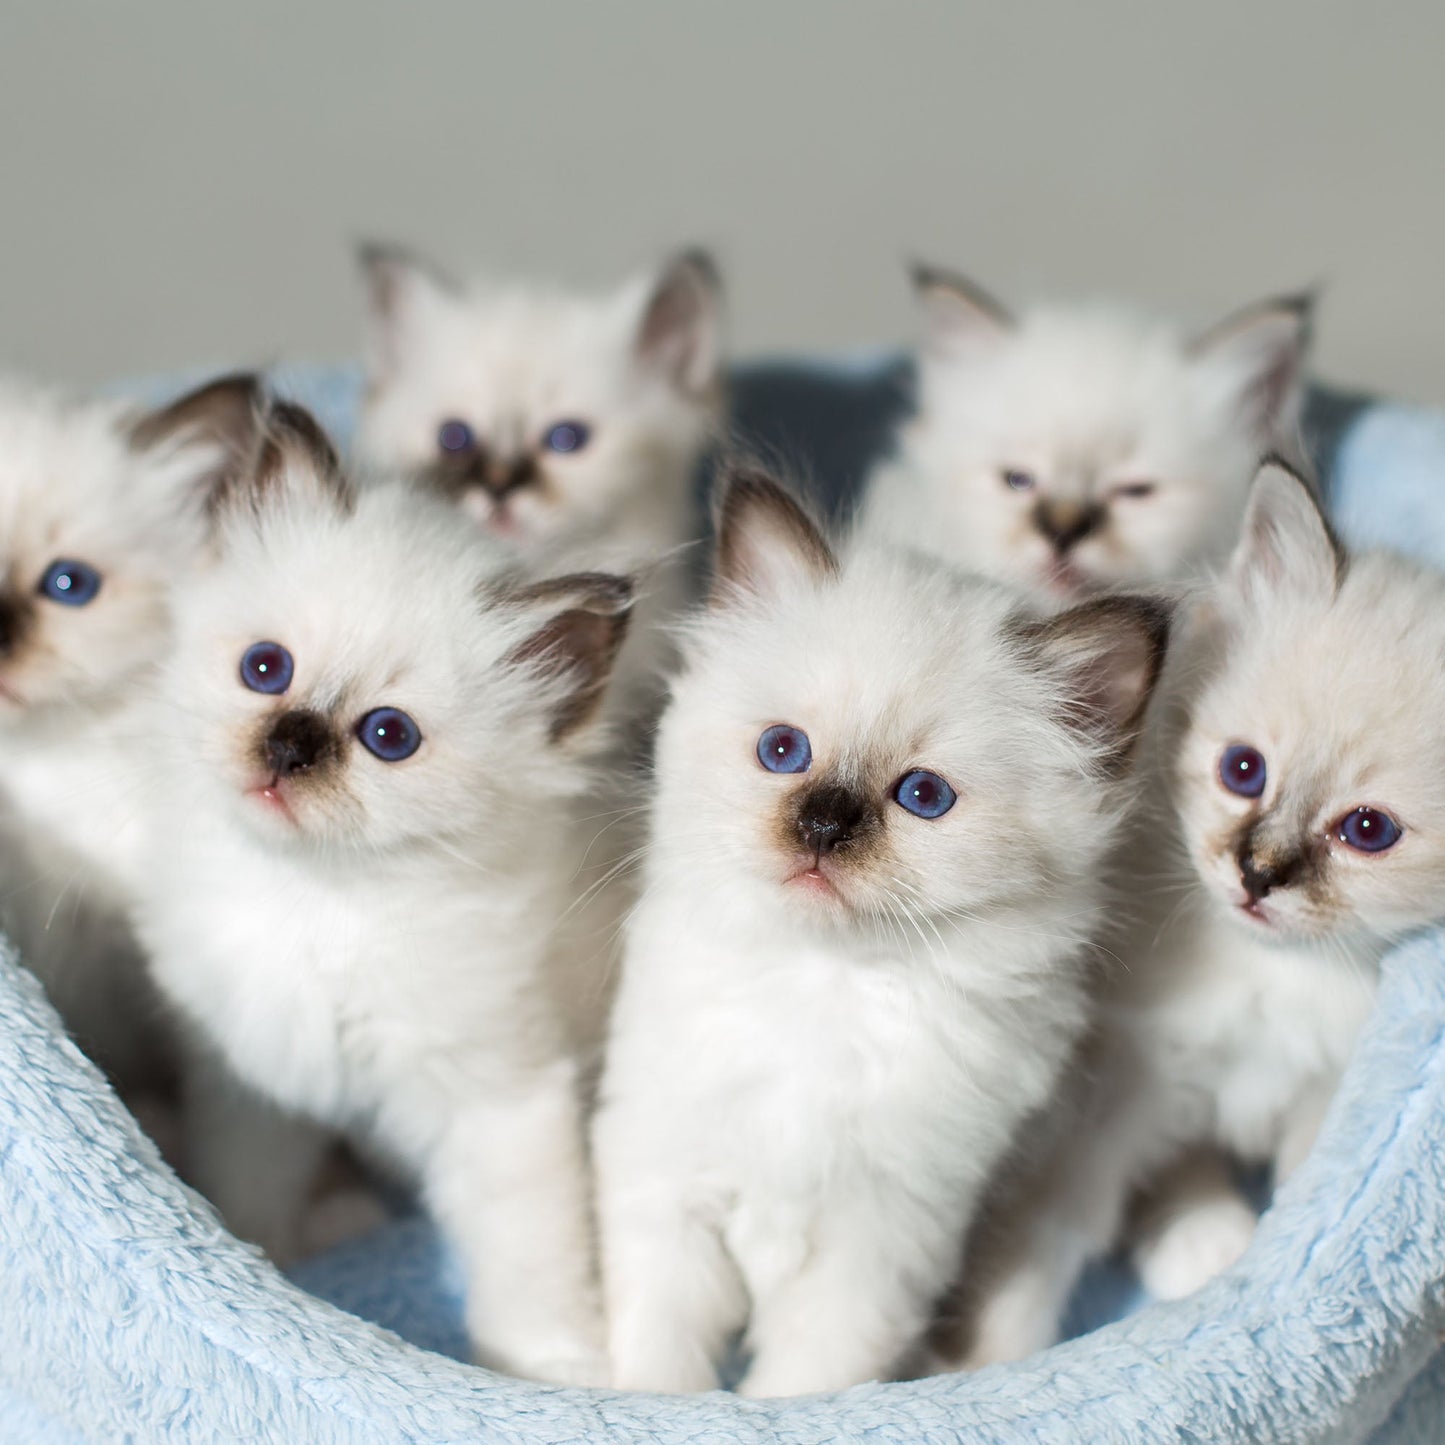 Help Save Newborn Kittens